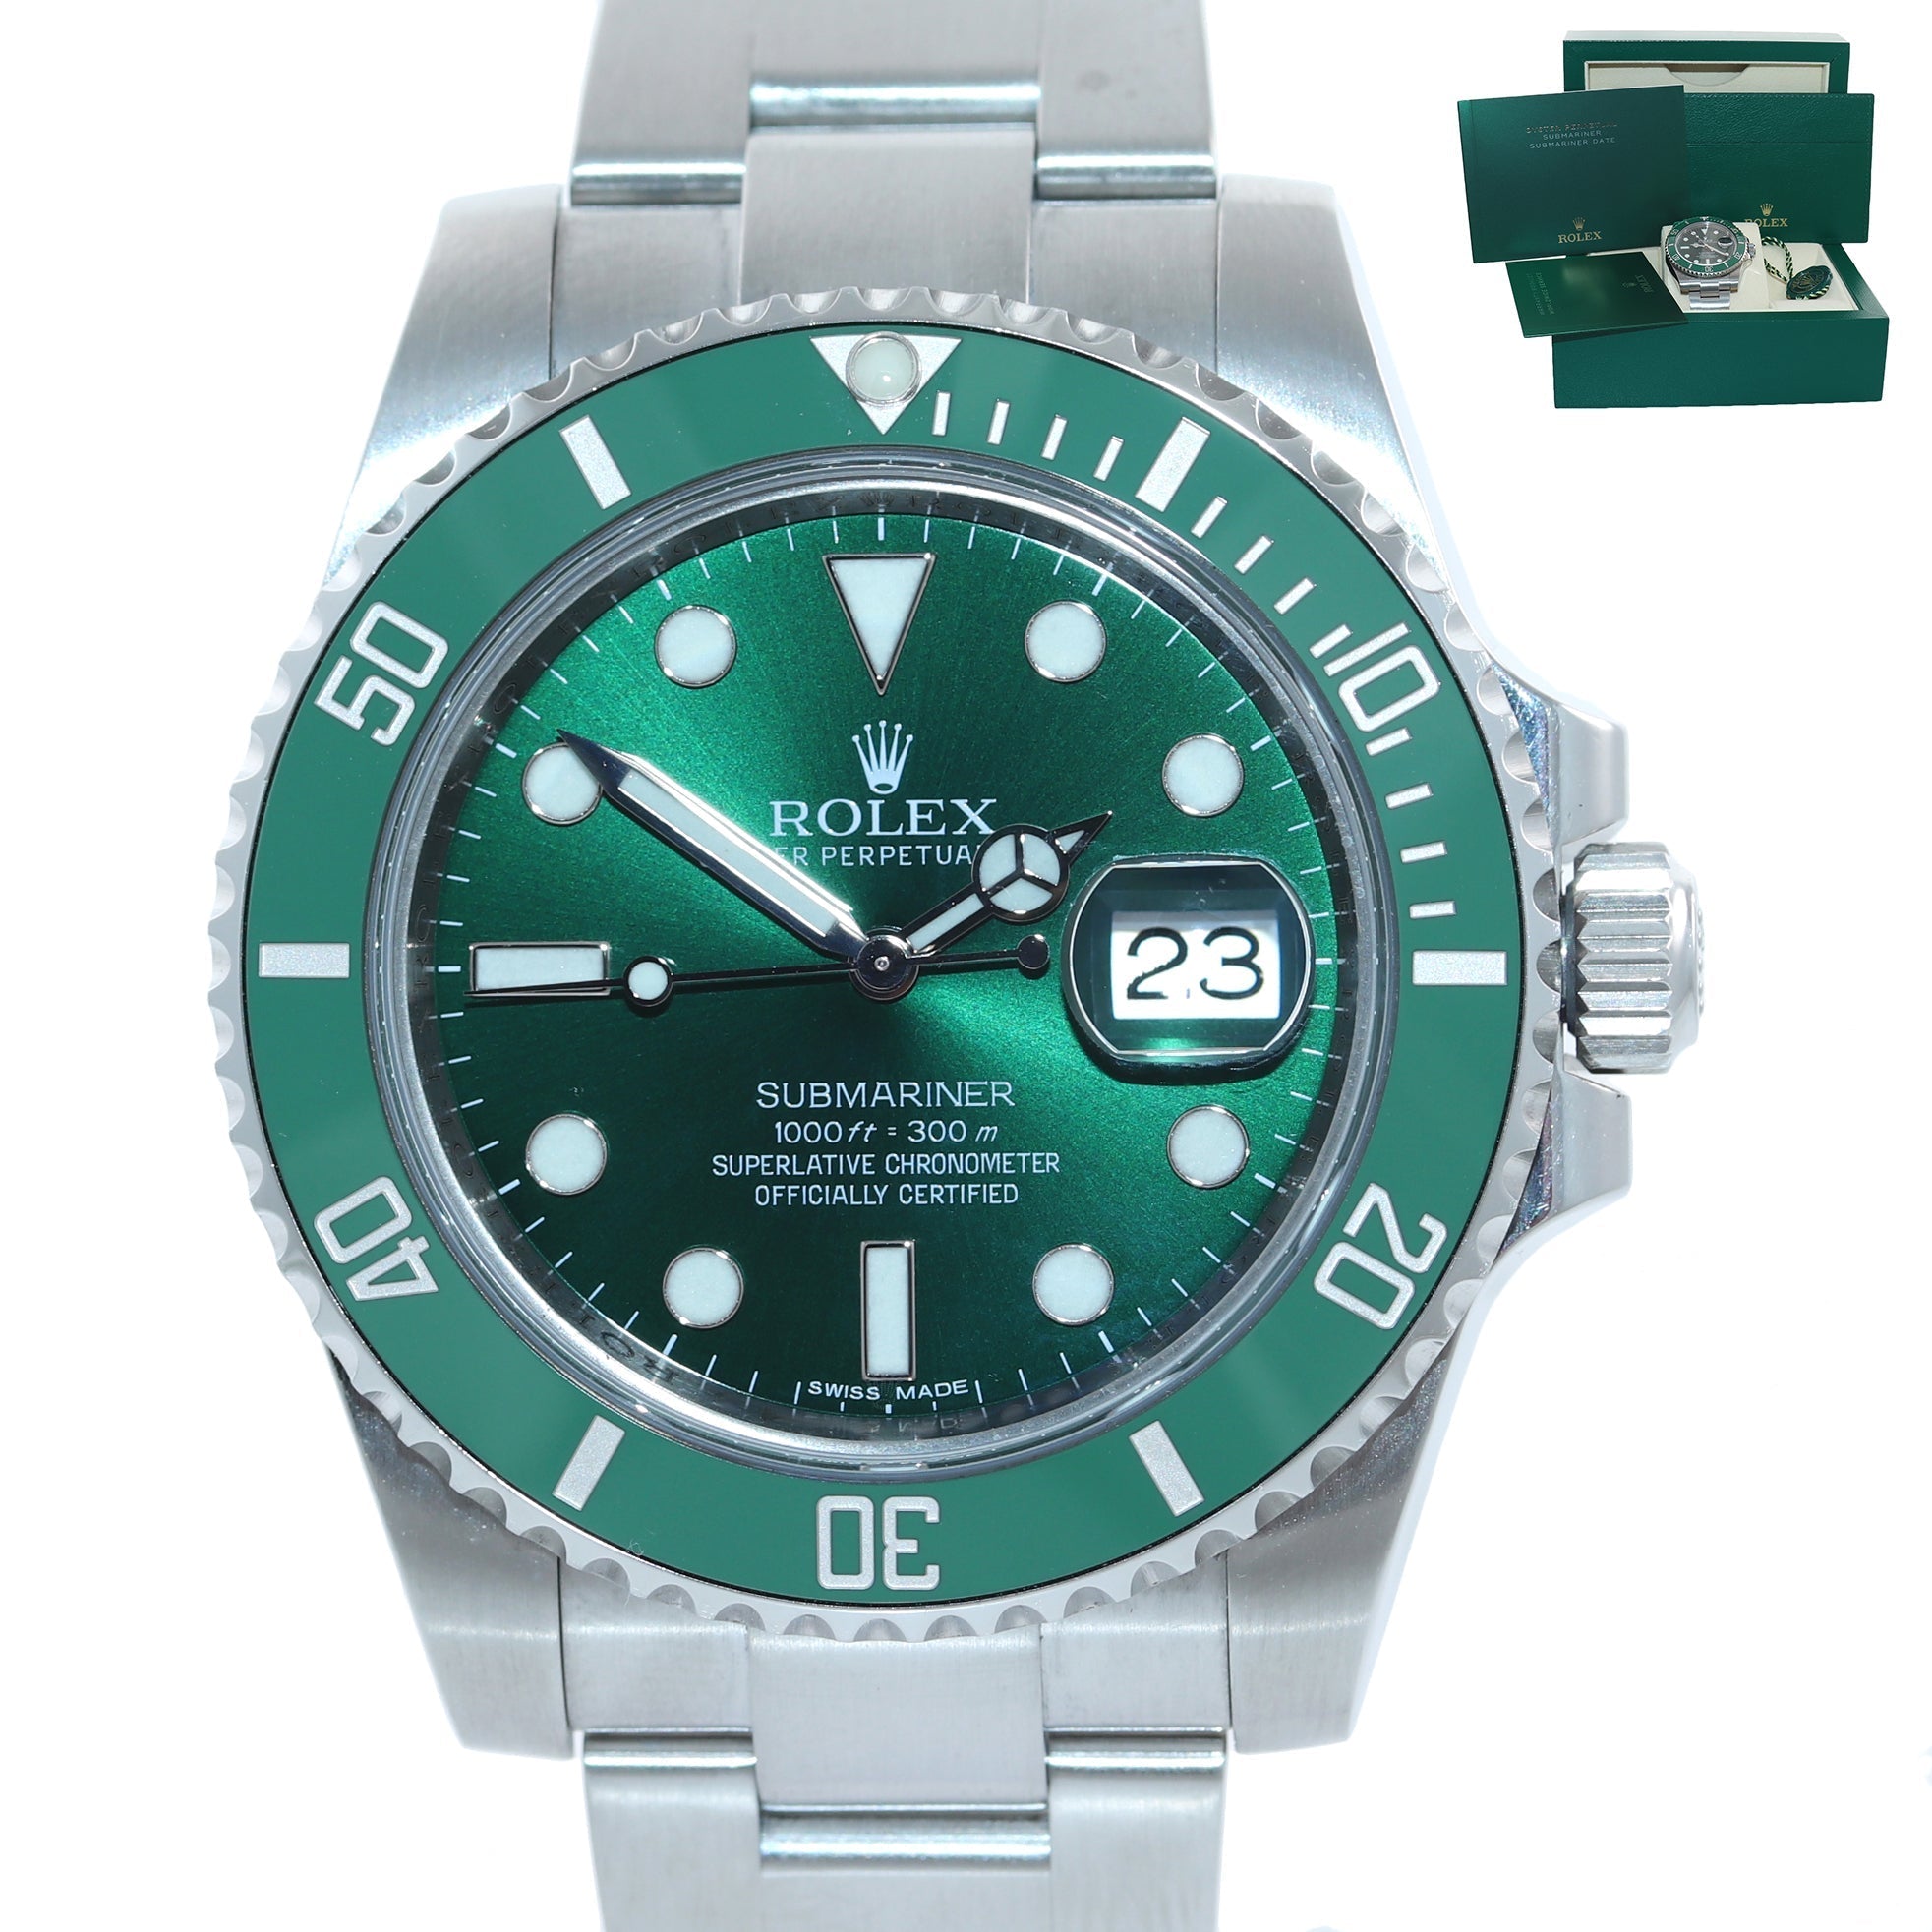 DISCONTINUED Rolex Submariner 116610LV Green Ceramic Watch